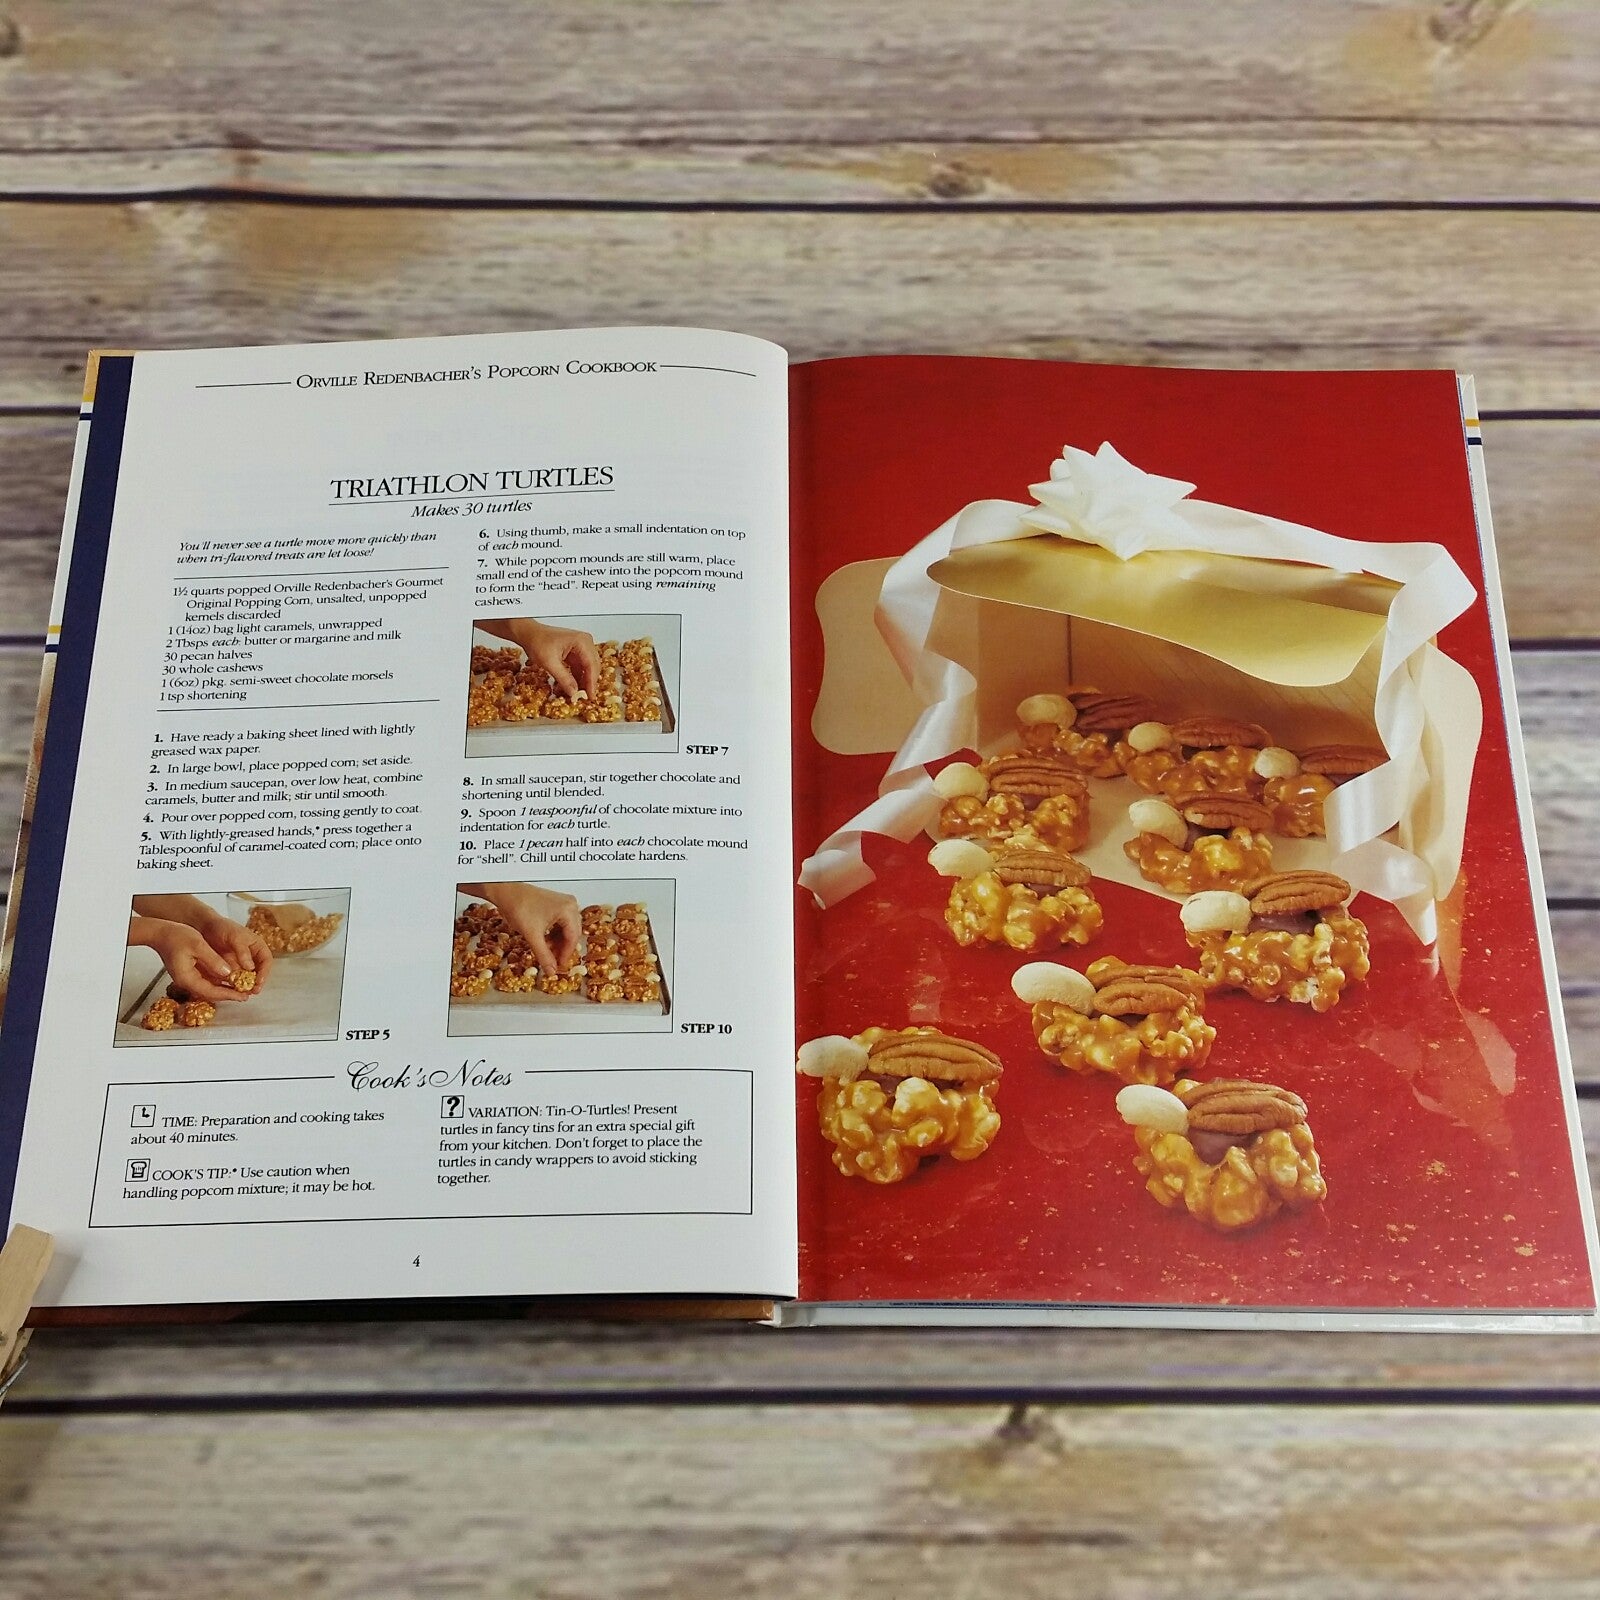 Vintage Cookbook Pop Corn Orville Redenbacher Popcorn 1992 Hunt-Wesson Promo Hardcover - At Grandma's Table